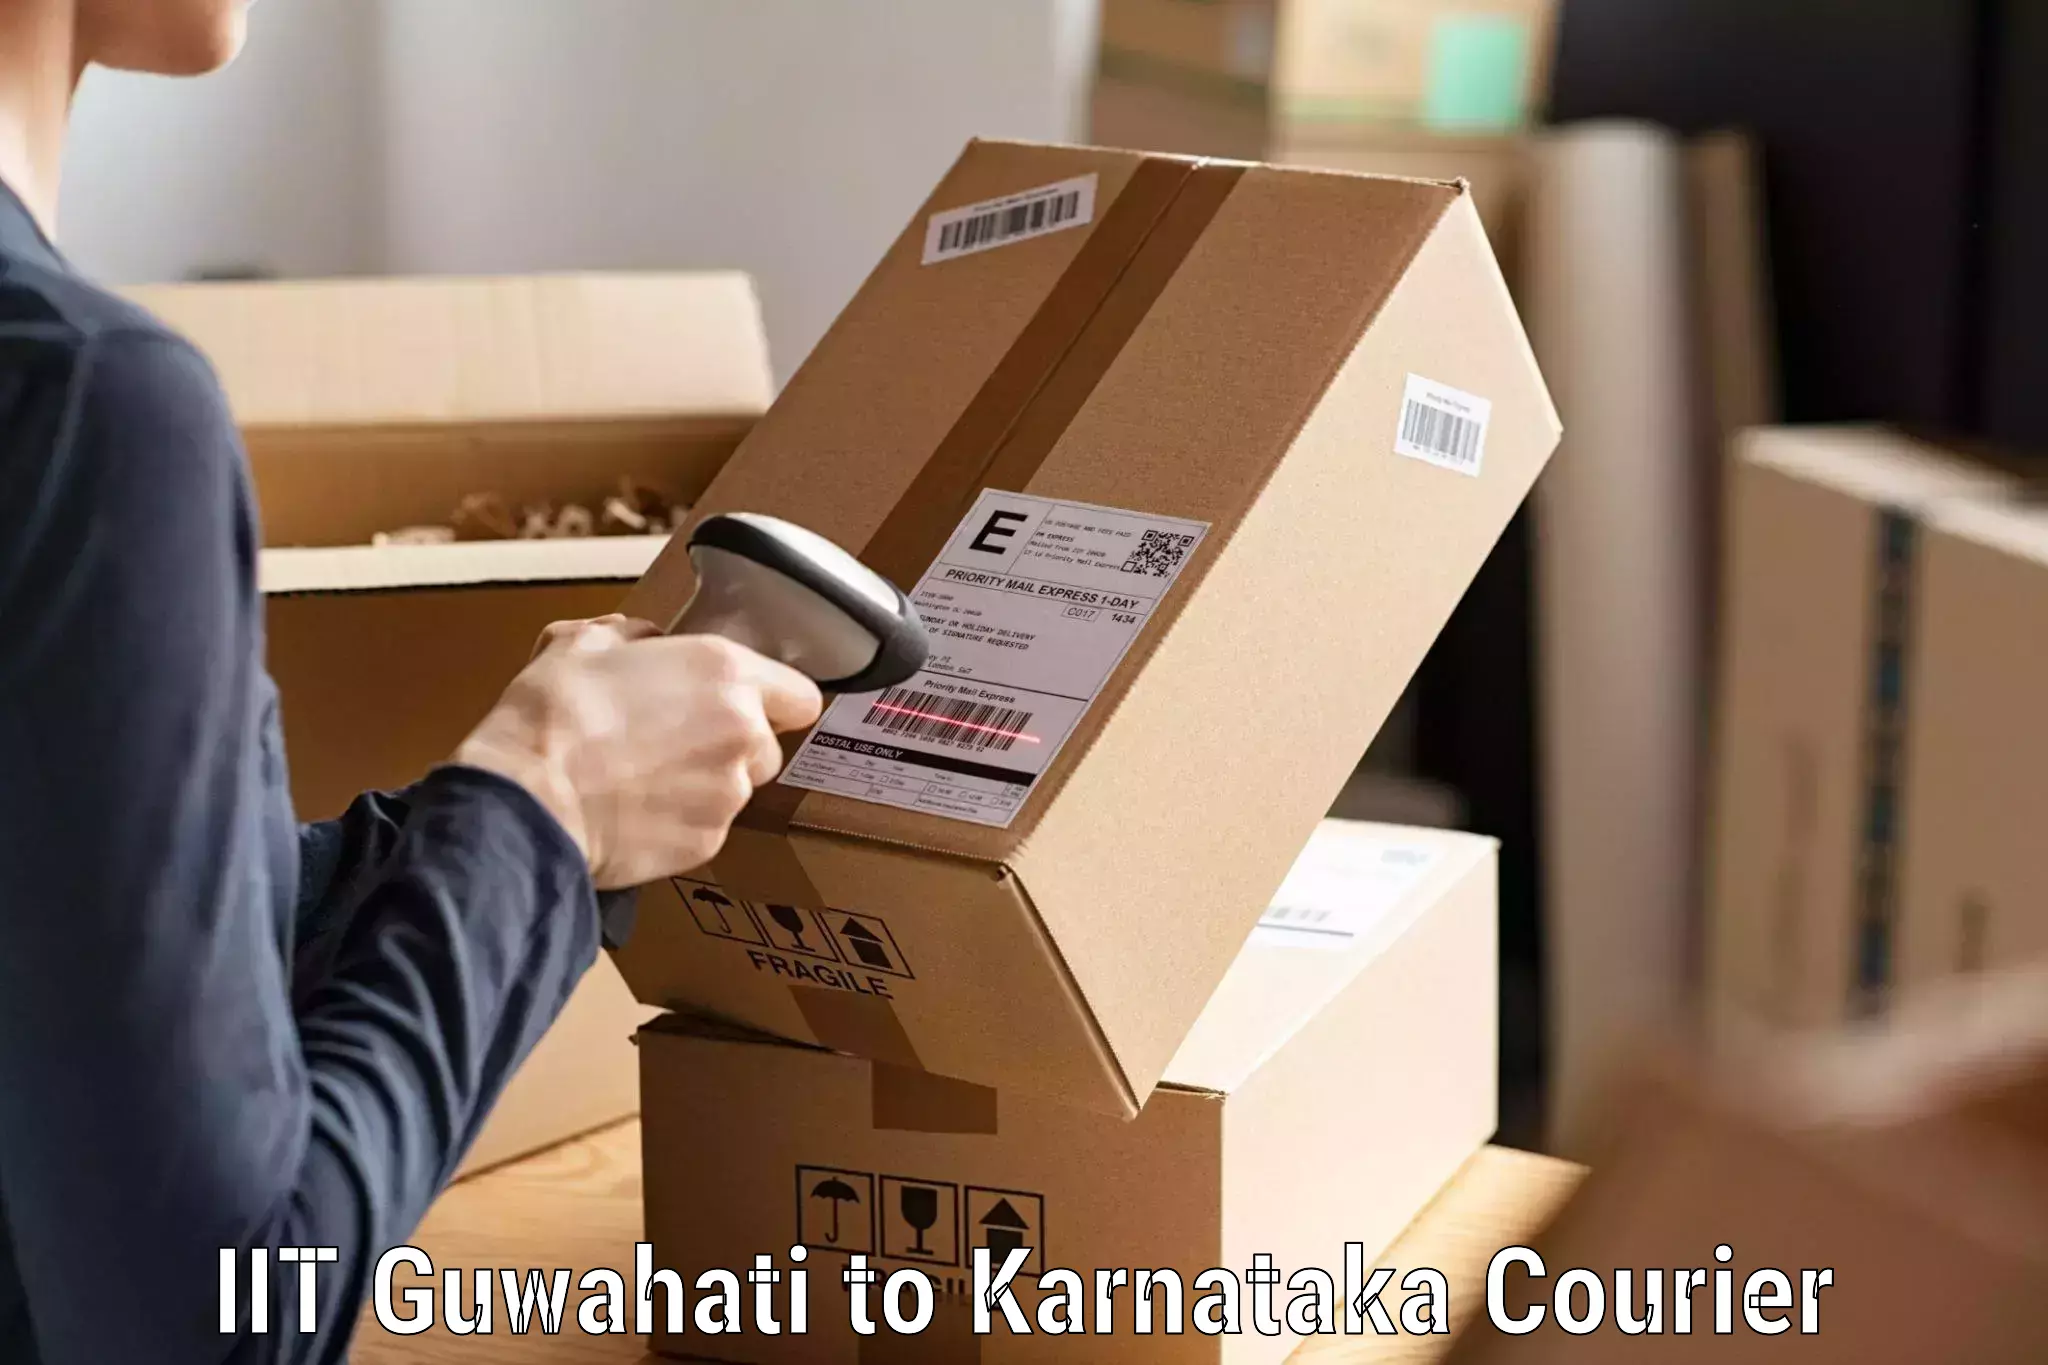 Professional courier handling IIT Guwahati to Karnataka